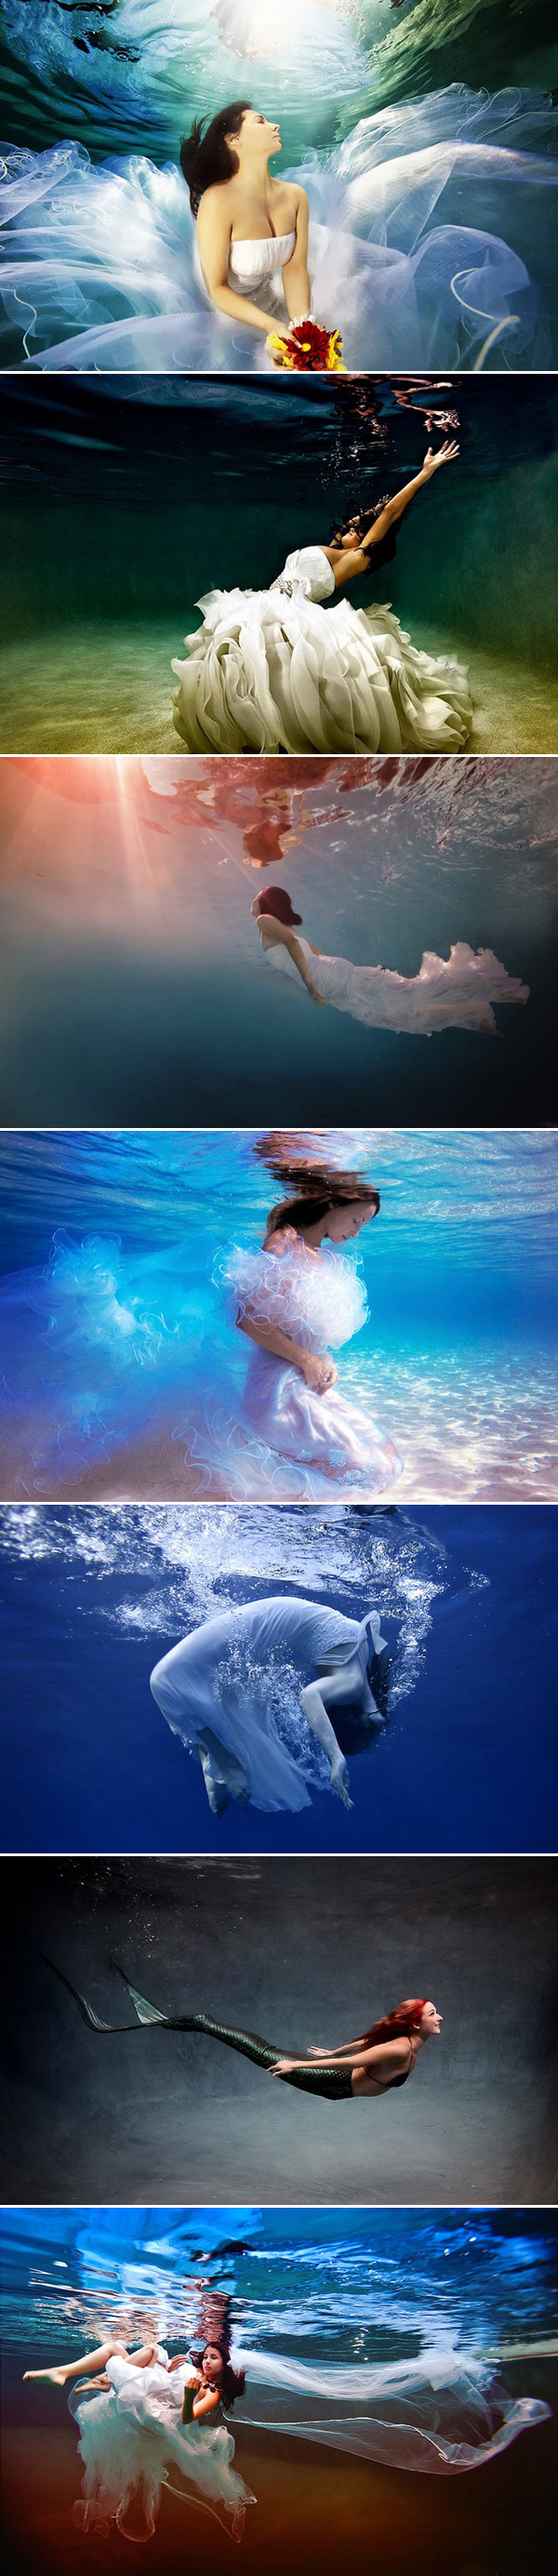 Underwater Brides Pictures